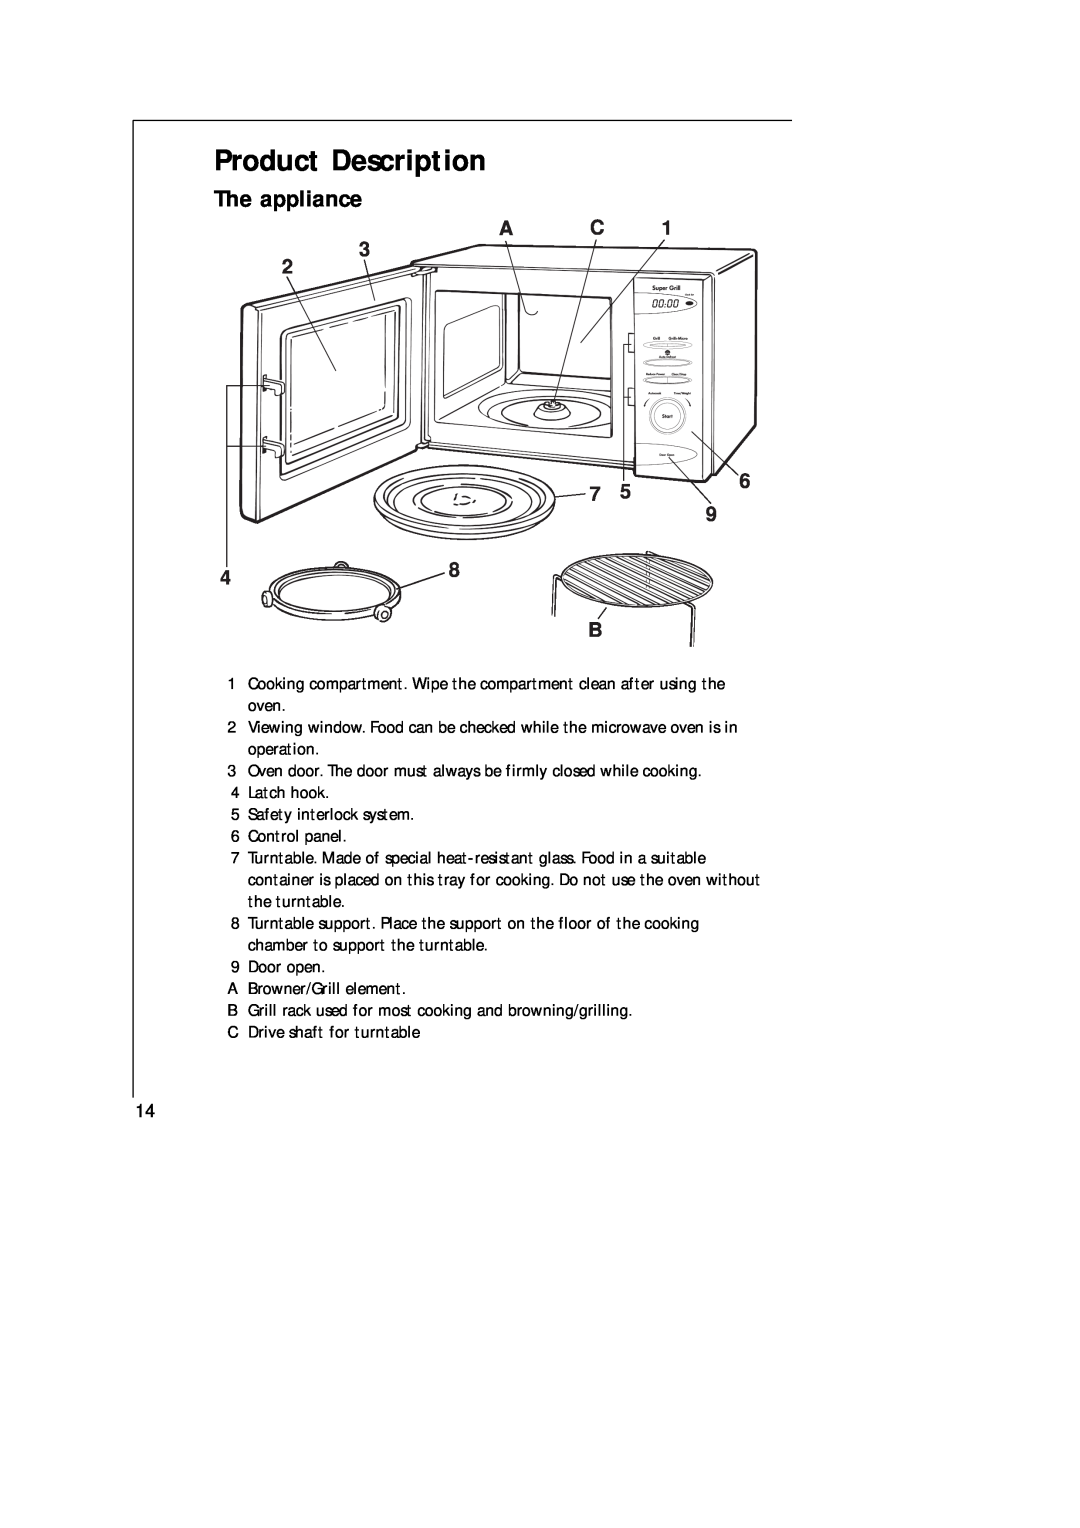 AEG MCD_274 manual Product Description, The appliance 